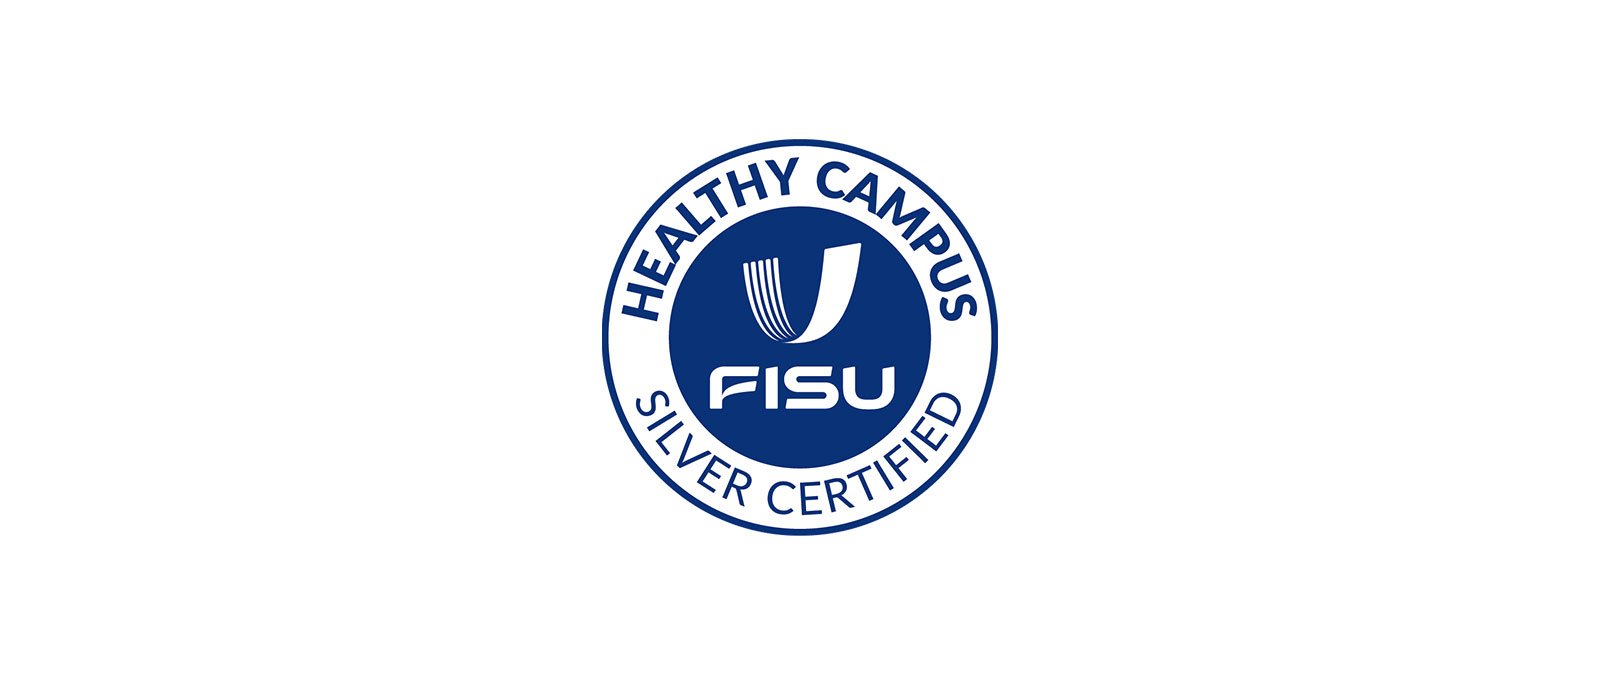 IULM Receives Healthy Campus Certification